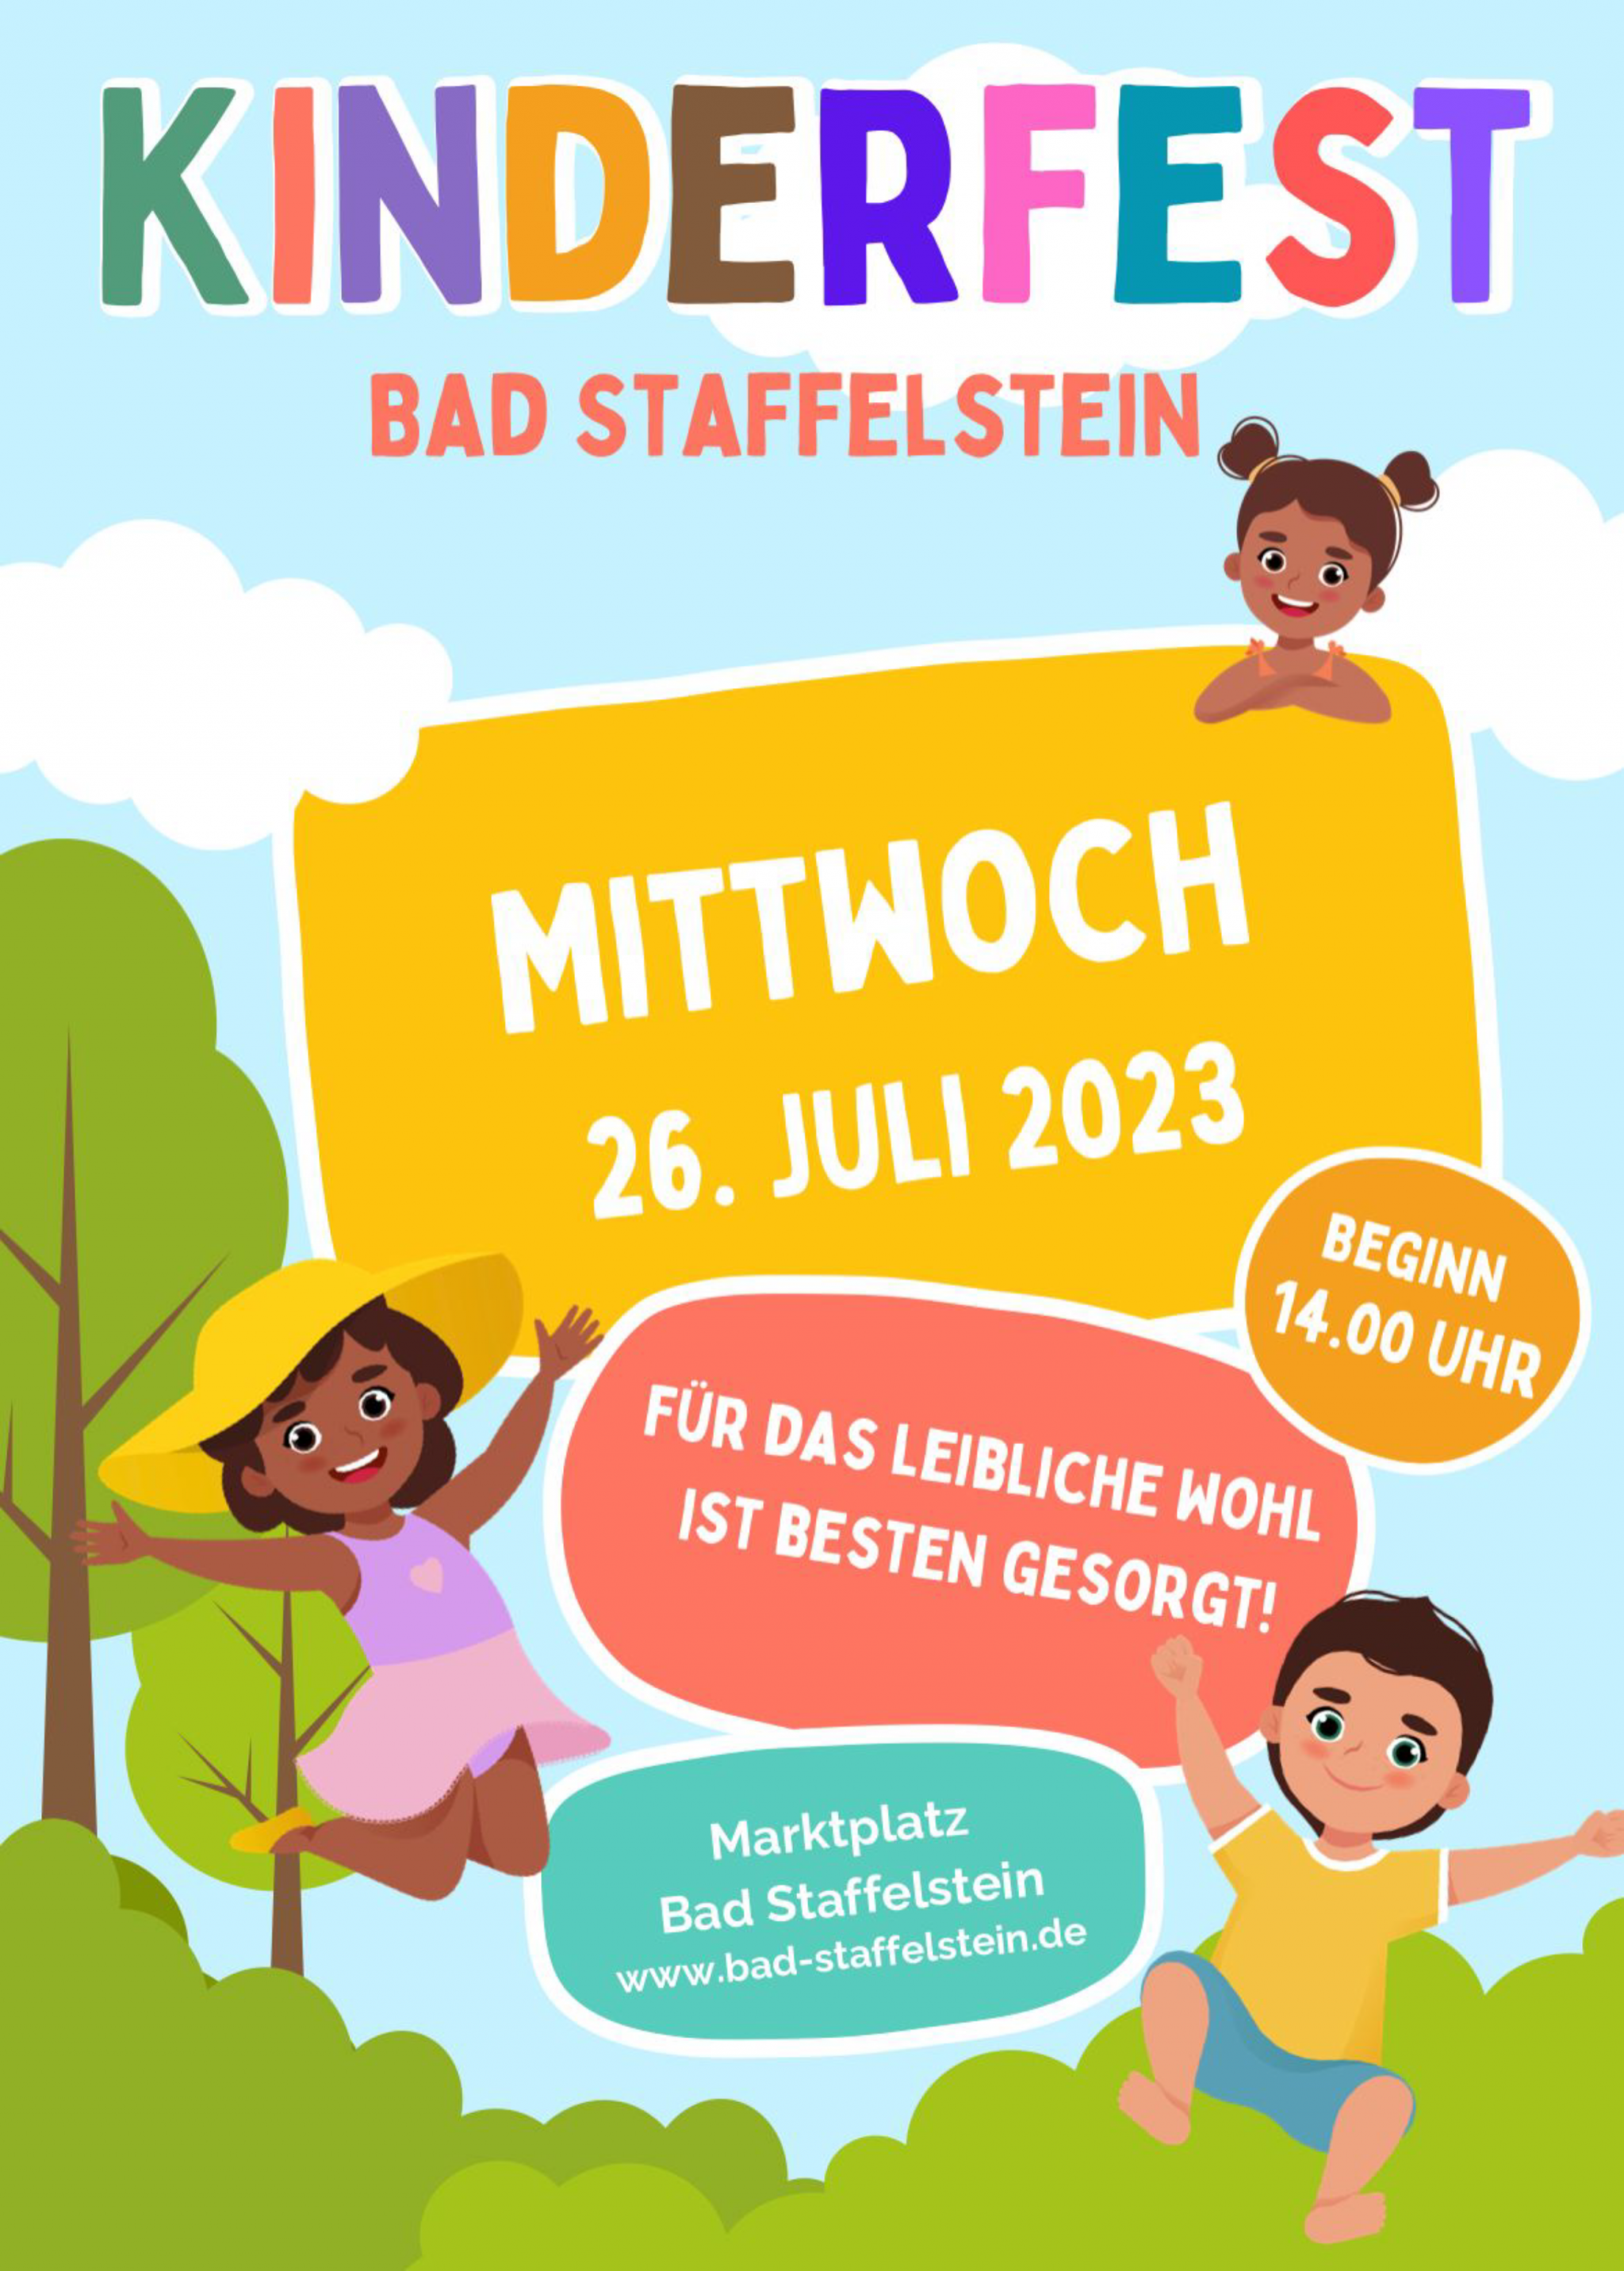 Kinderfest 2023 Bad Staffelstein